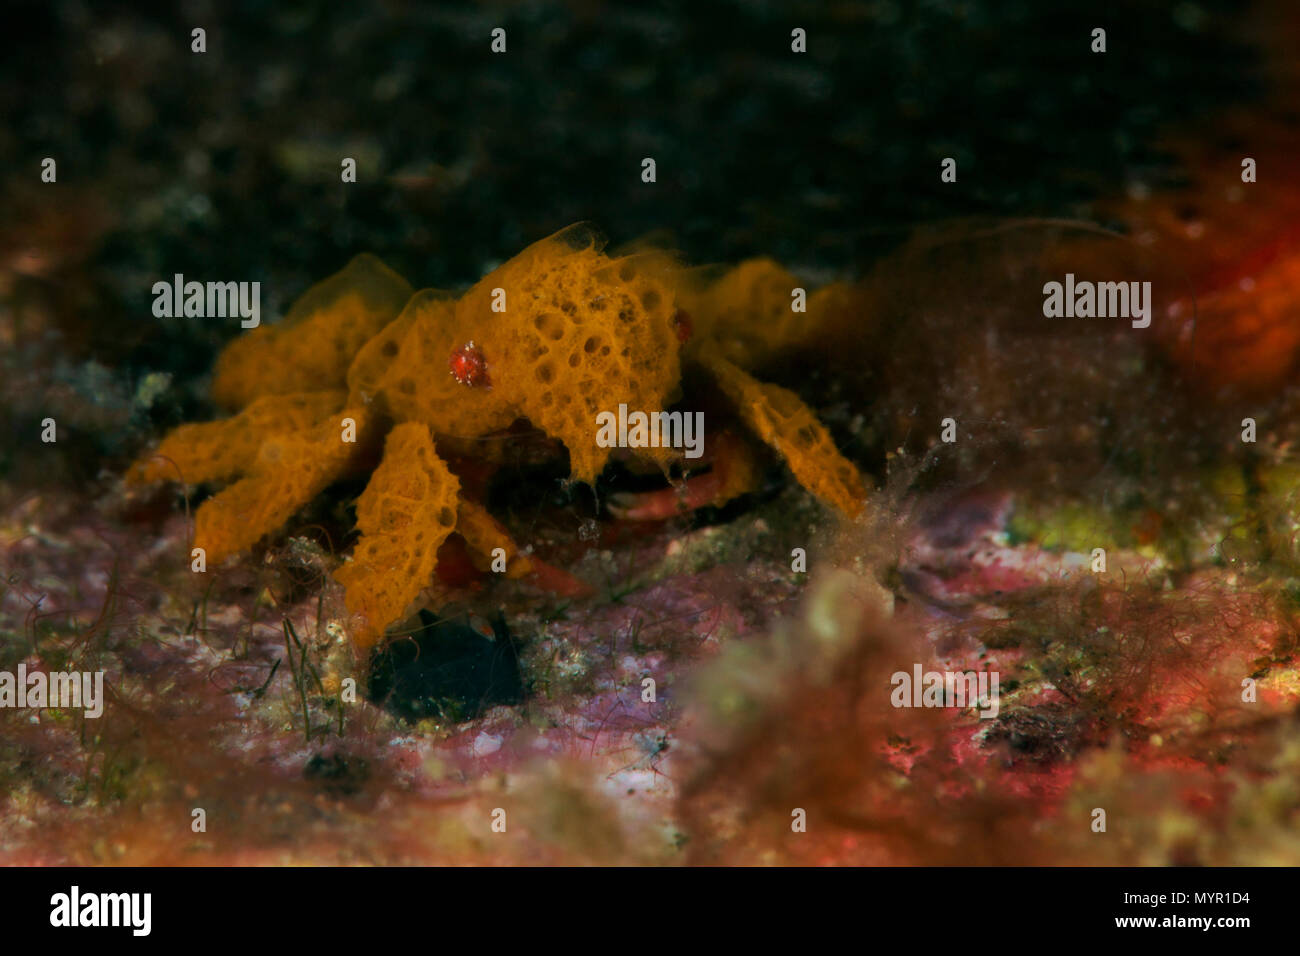 Decorator Crab (Achaeus spp.). Picture was taken in Anilao, Philippines Stock Photo